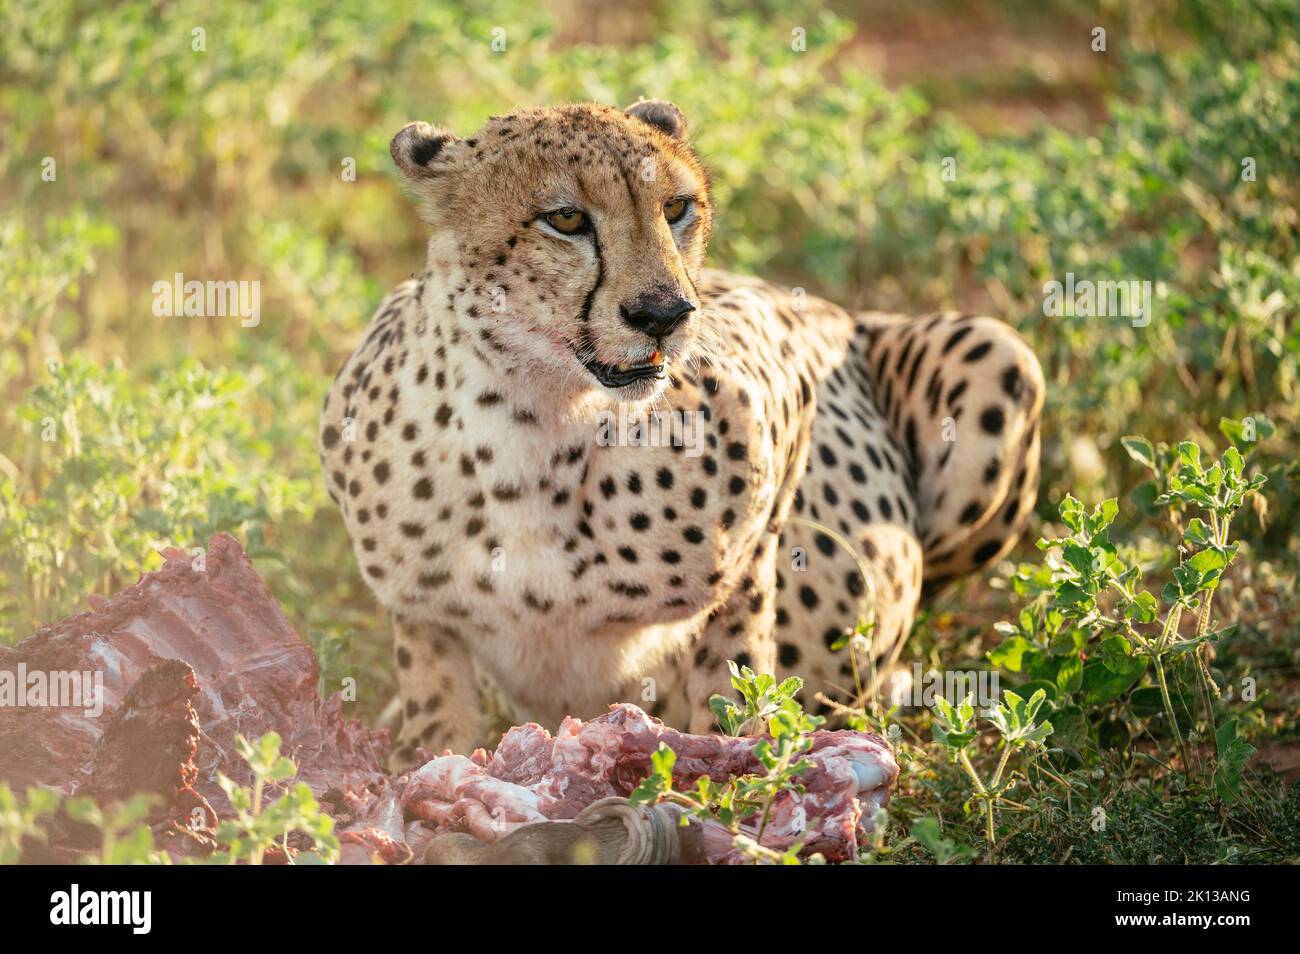 Cheetah eating Wildebeest carcass, Marataba, Marakele National Park, South Africa, Africa Stock Photo